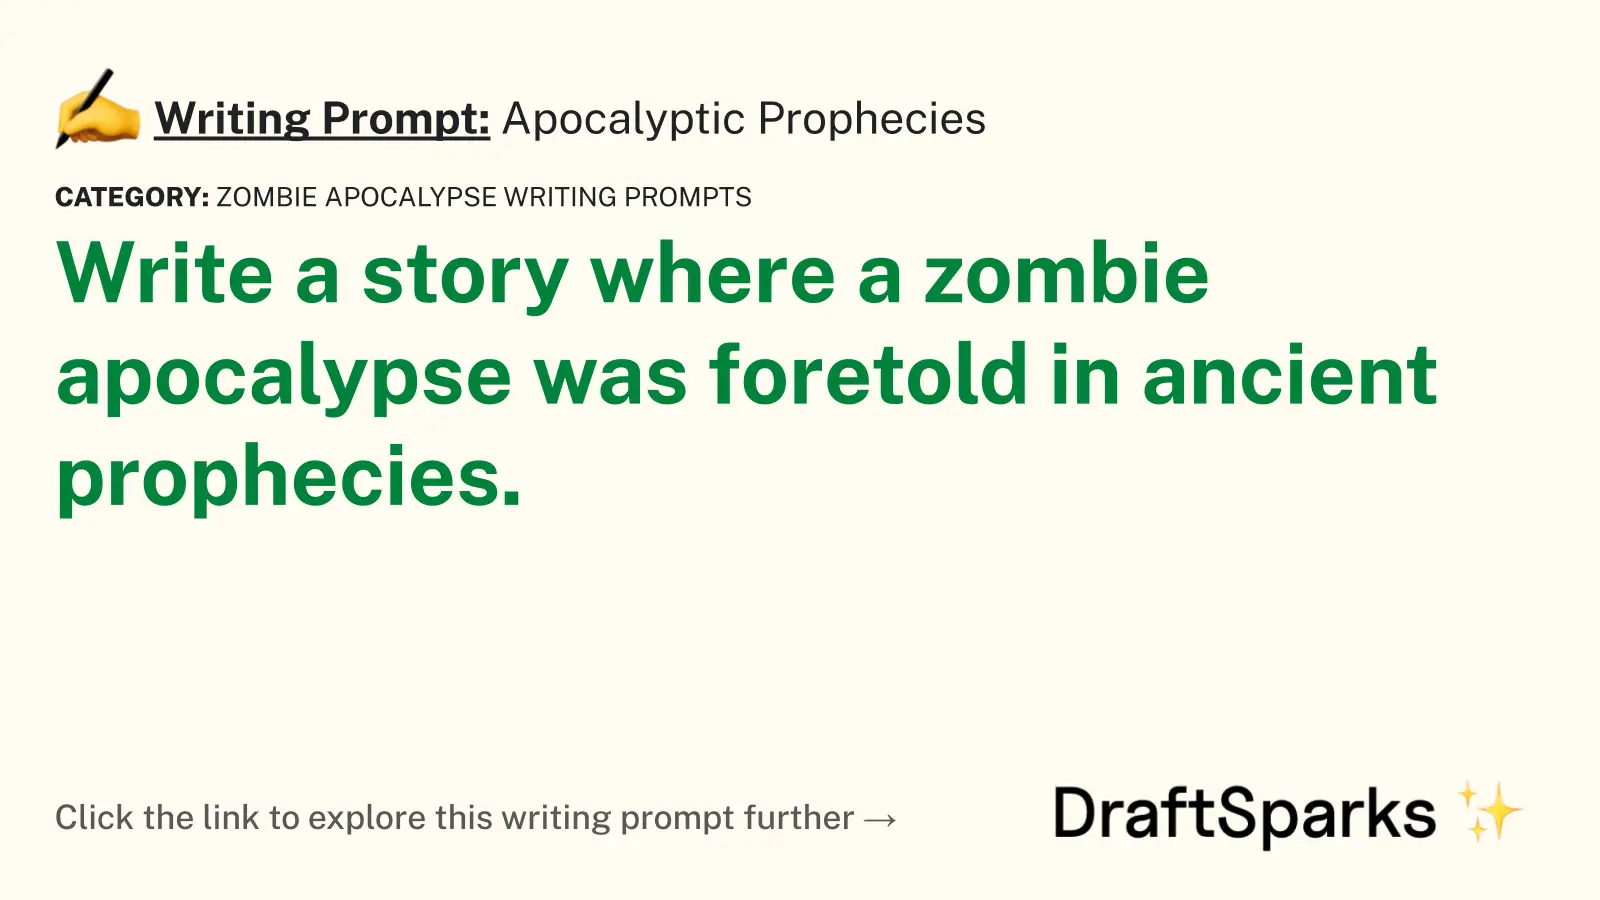 Apocalyptic Prophecies